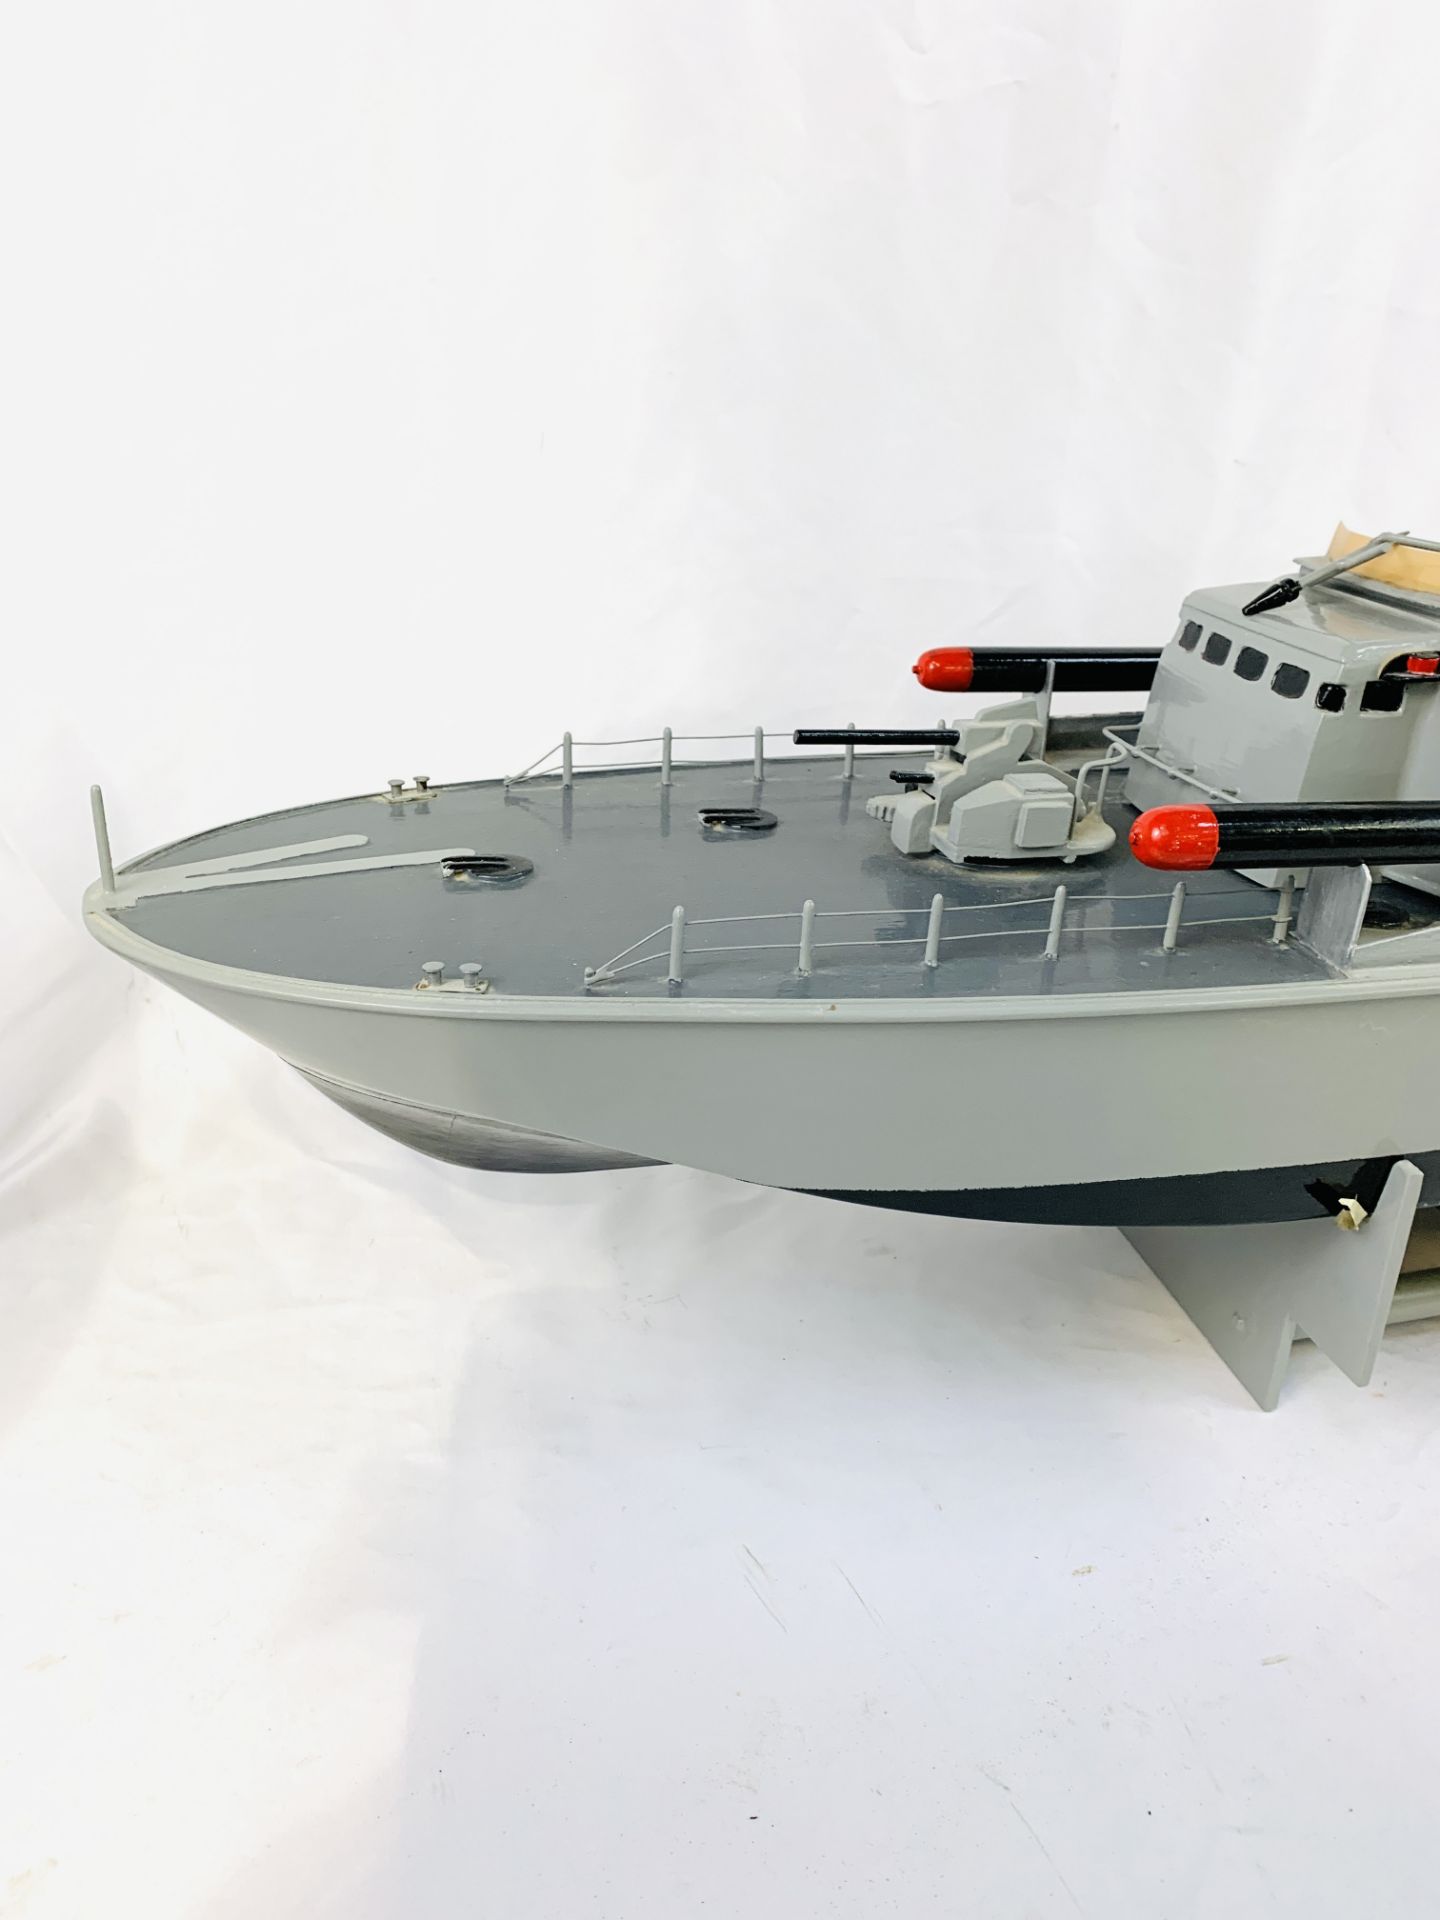 Precedent model Malaysian gas turbine fast patrol boat KD Perkasa - Image 2 of 6